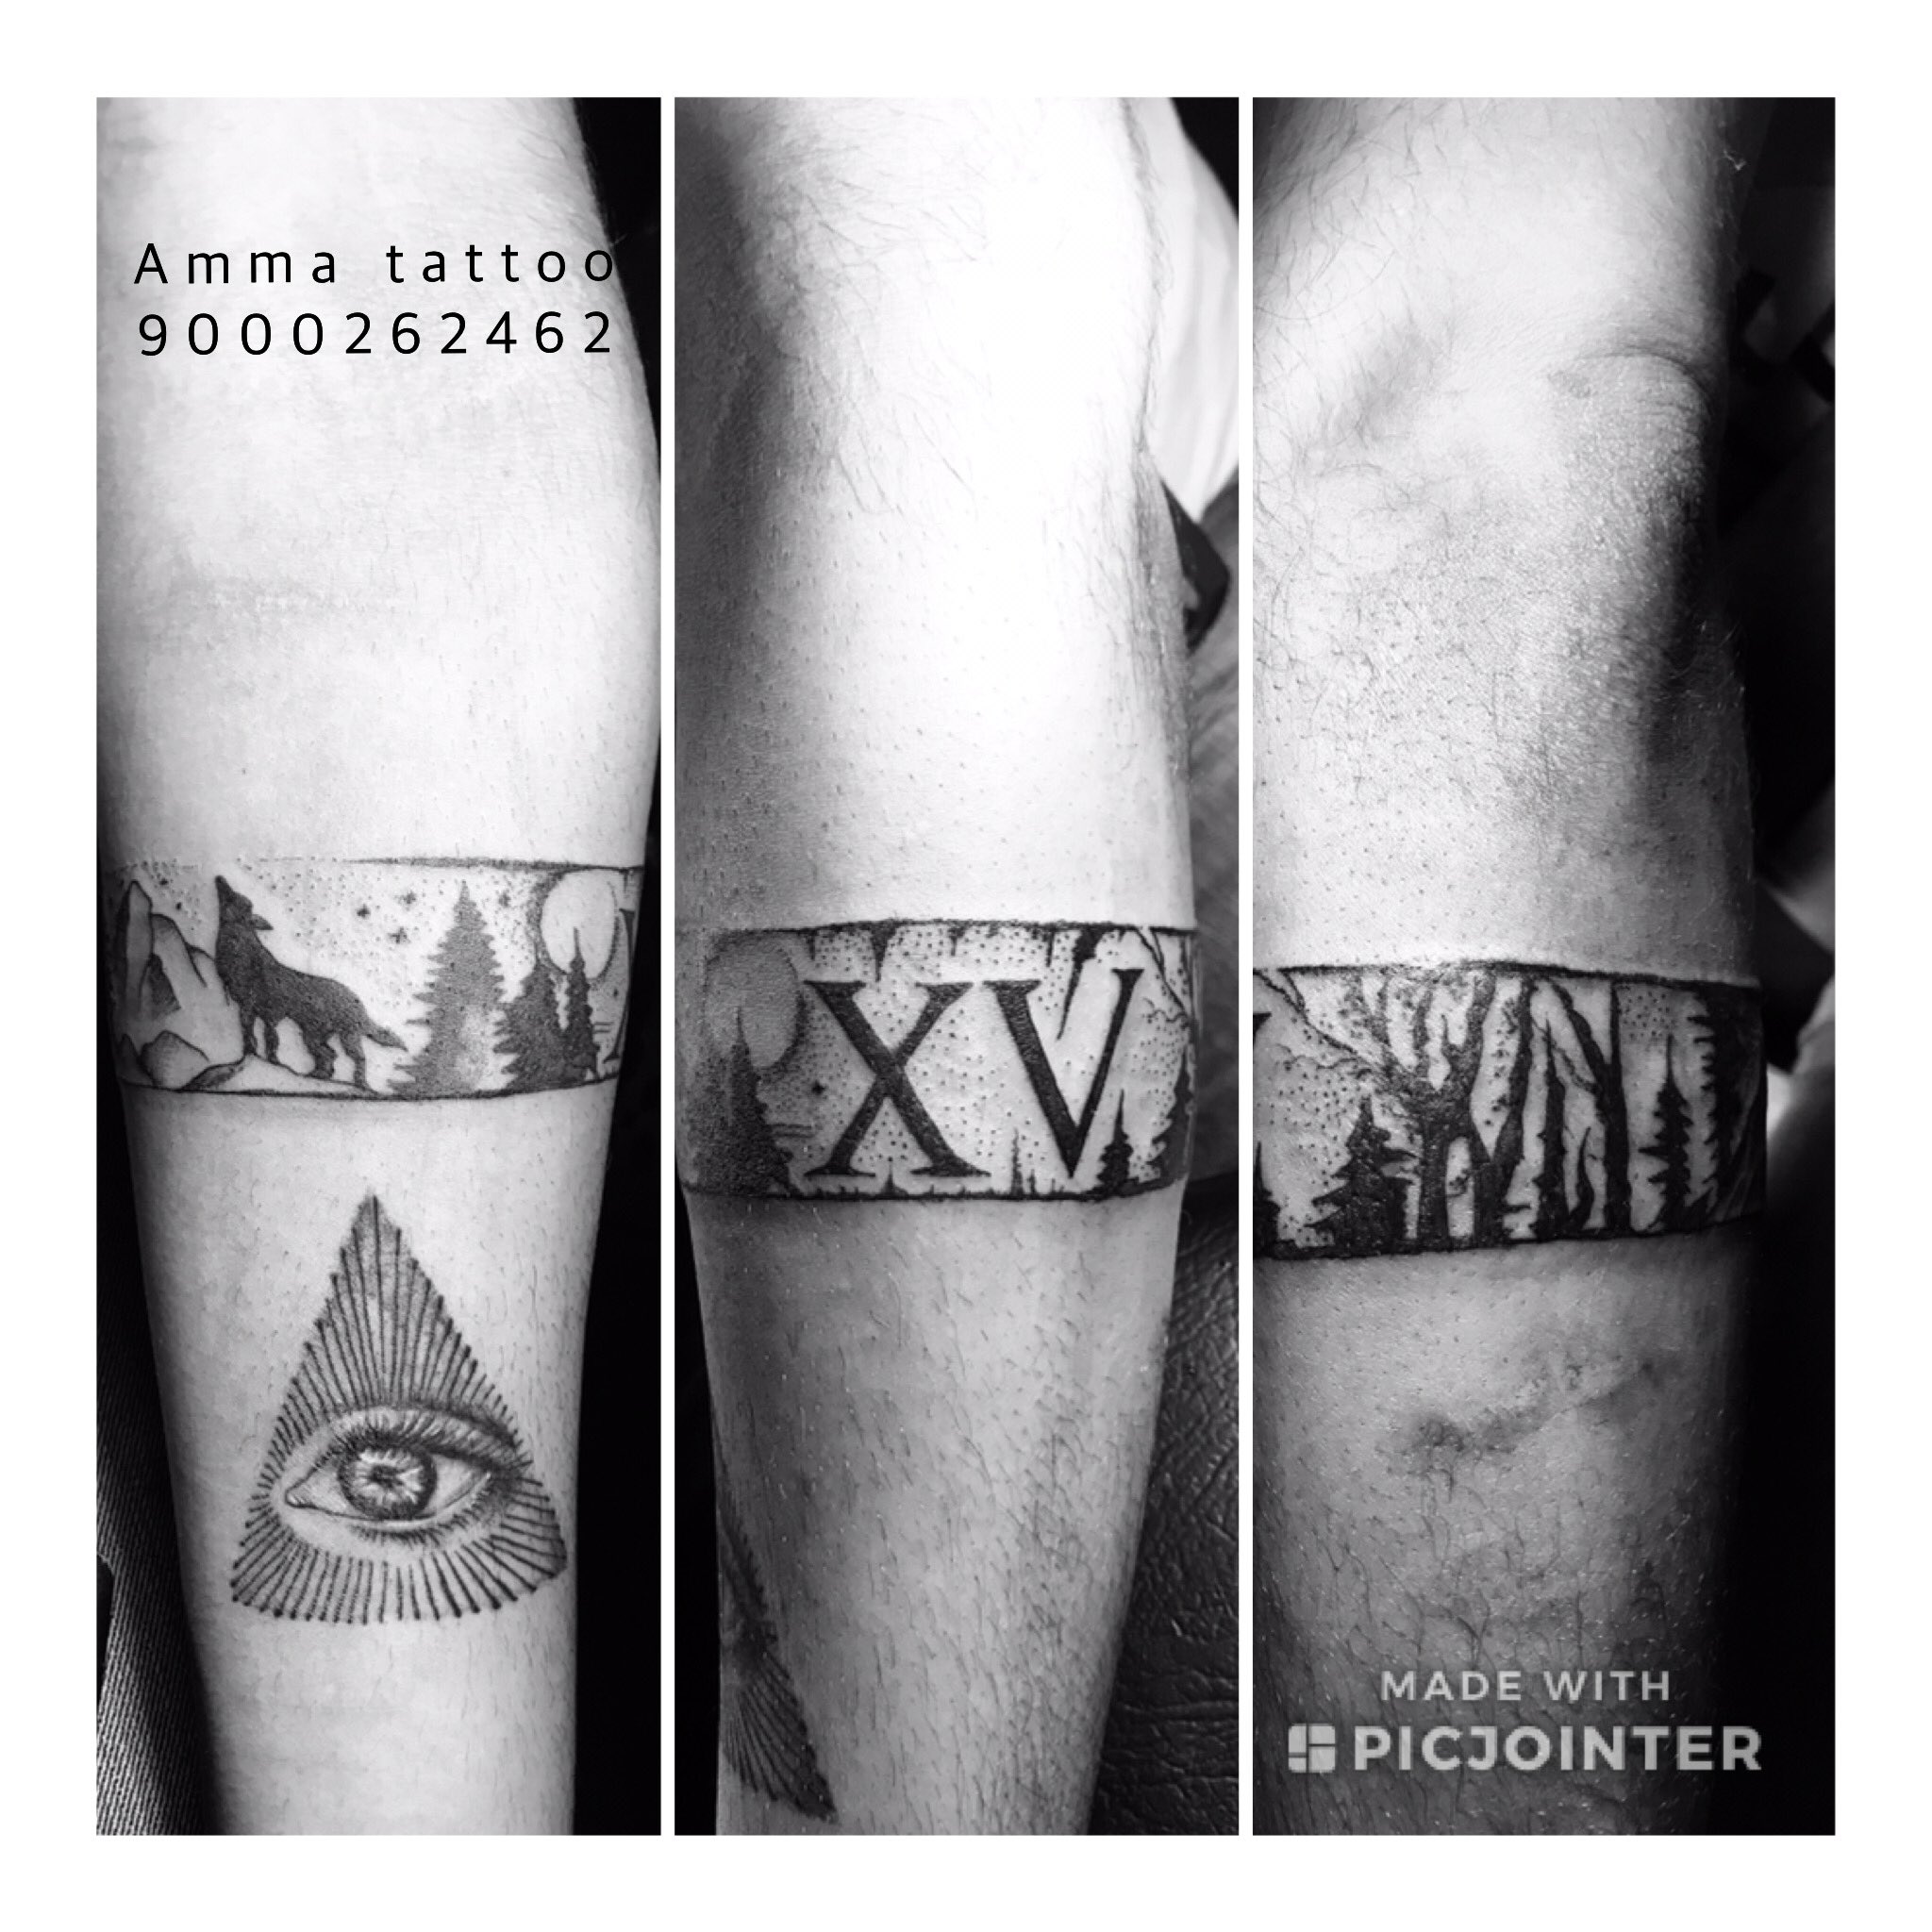 Amma tattoos on Instagram: 